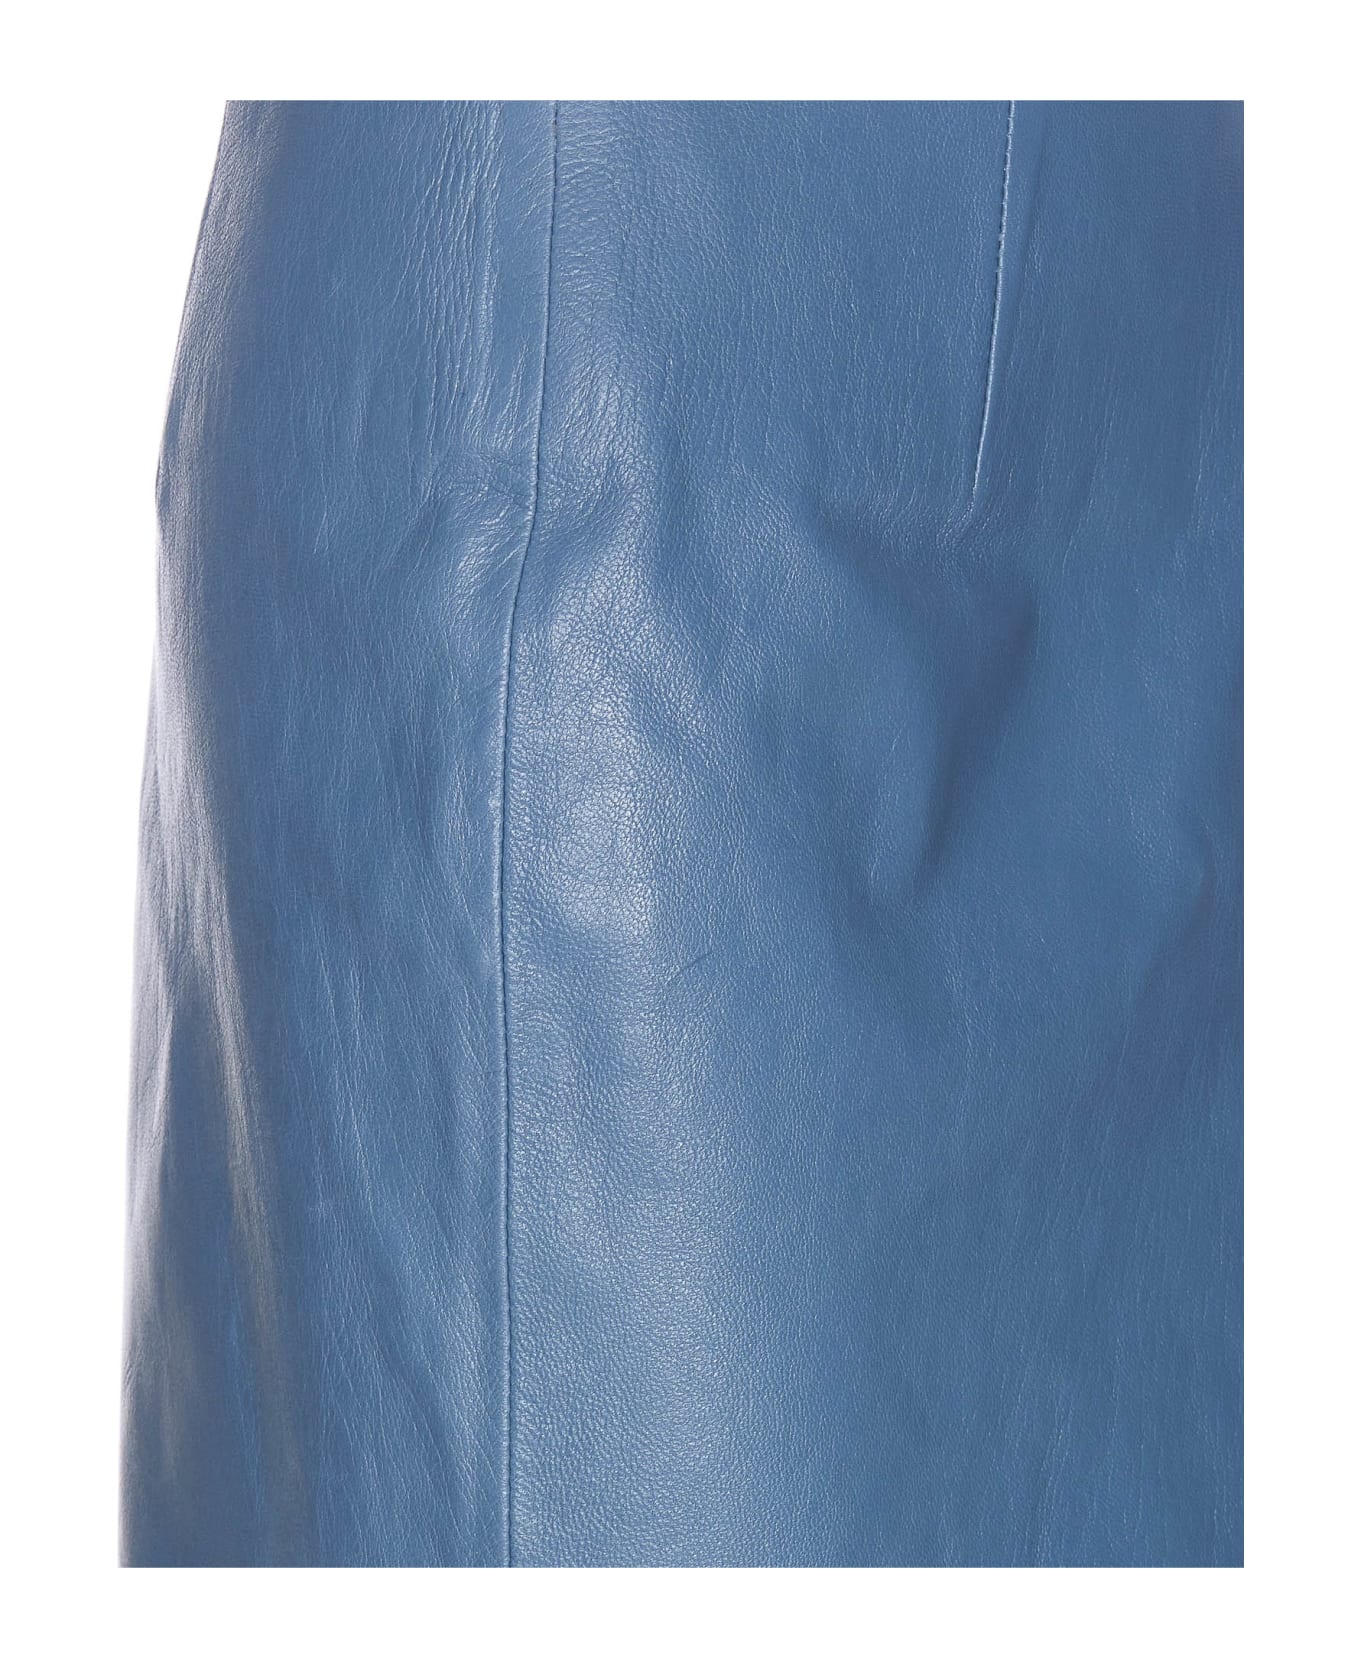 Marni Leather Skirt - 00B37 スカート